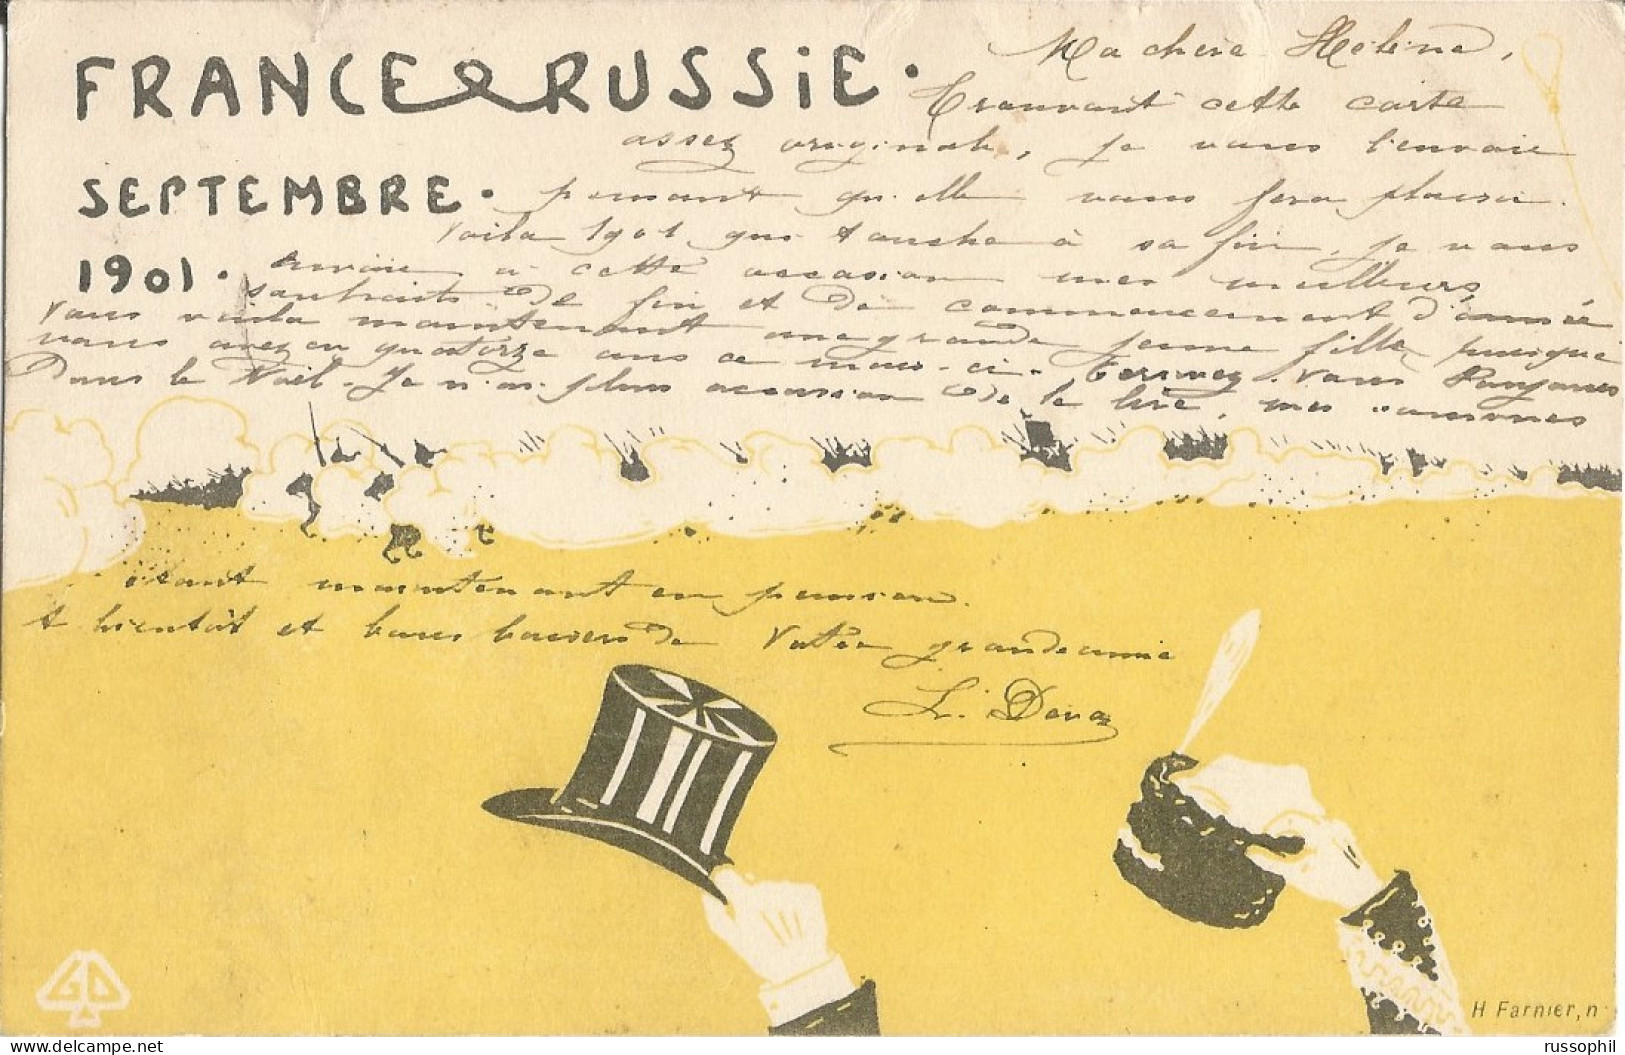 FRANCO RUSSIAN ALLIANCE - FRANCE RUSSIE SEPTEMBRE 1901 - H. FARNIER N° 6 - 1901 - Eventi